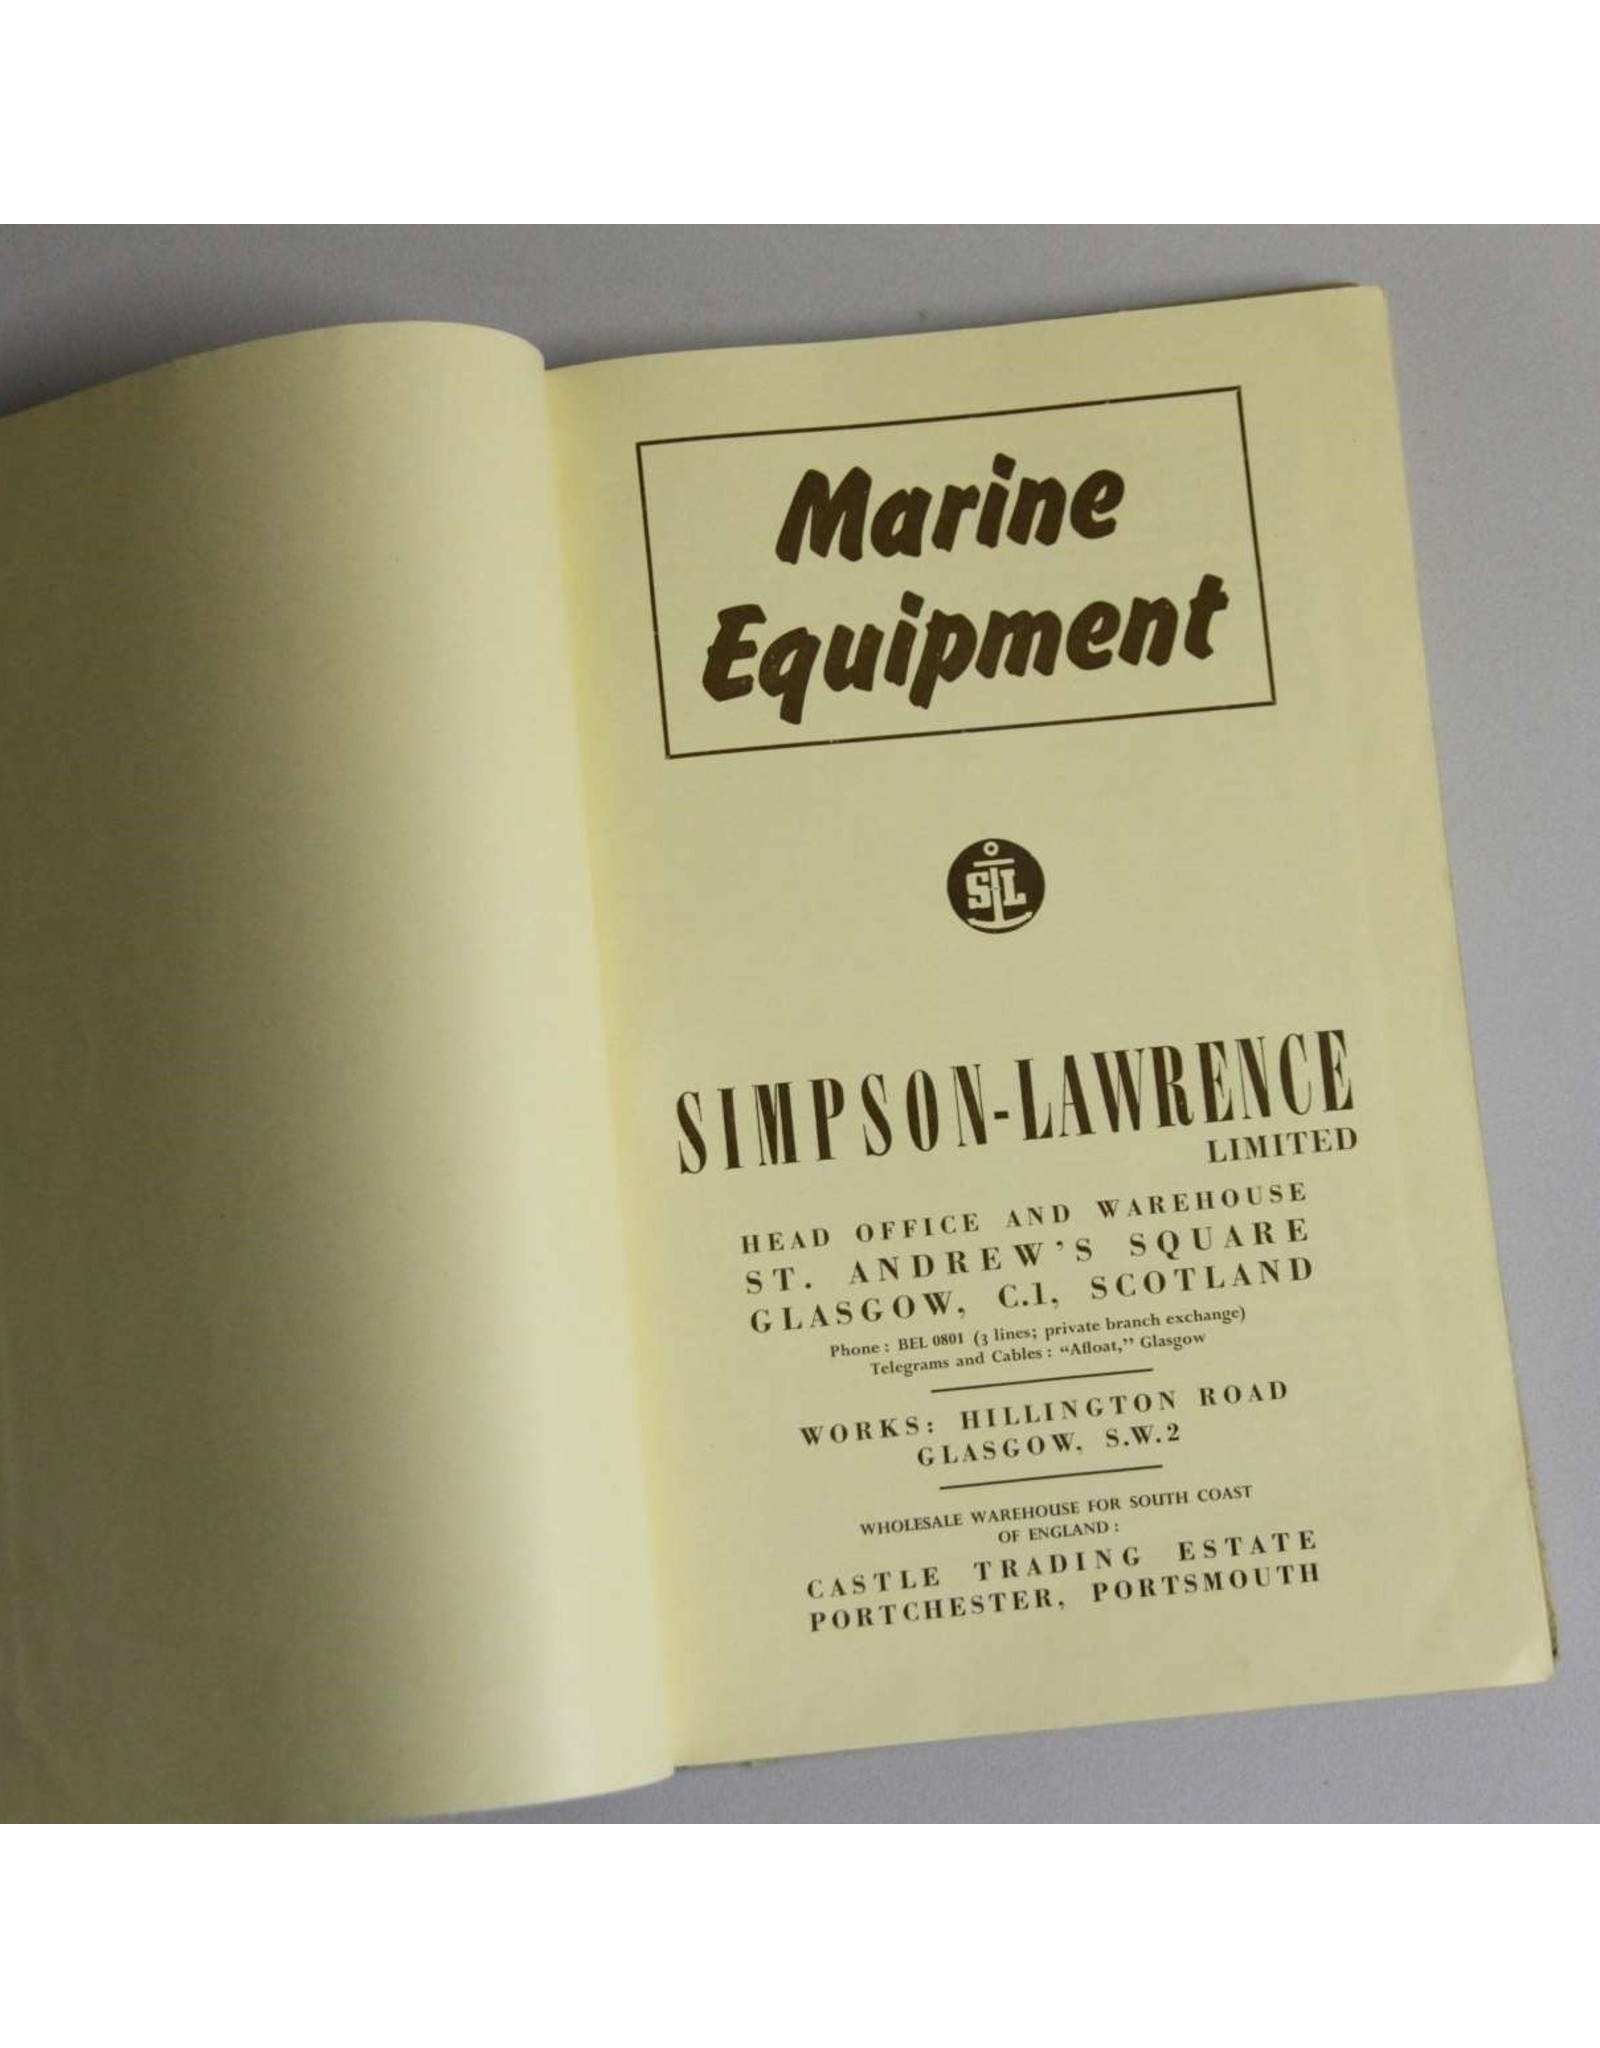 Hardcover book - Marine Equipment catalogue, Simpson-Lawrence, Glasgow, 1961